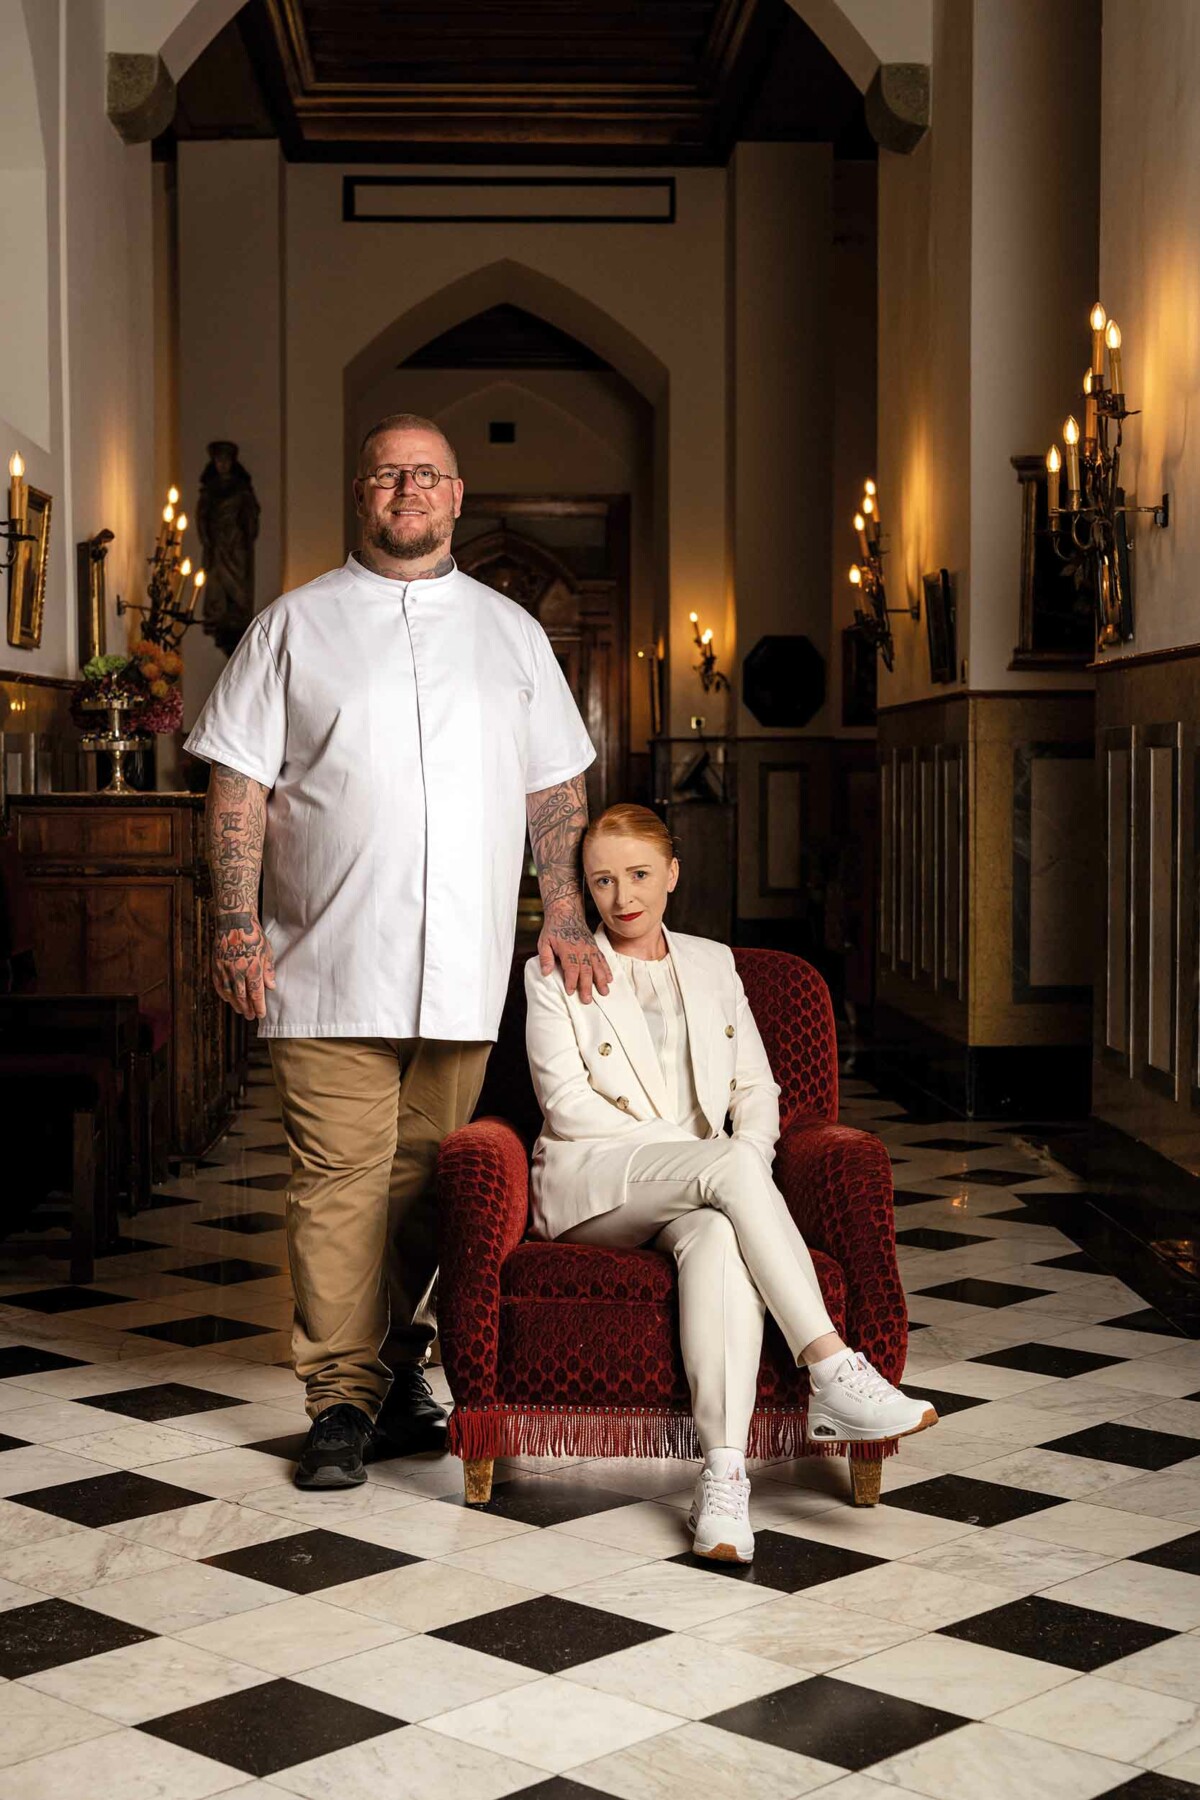 Chef standing next to restaurant manager in velvet chair